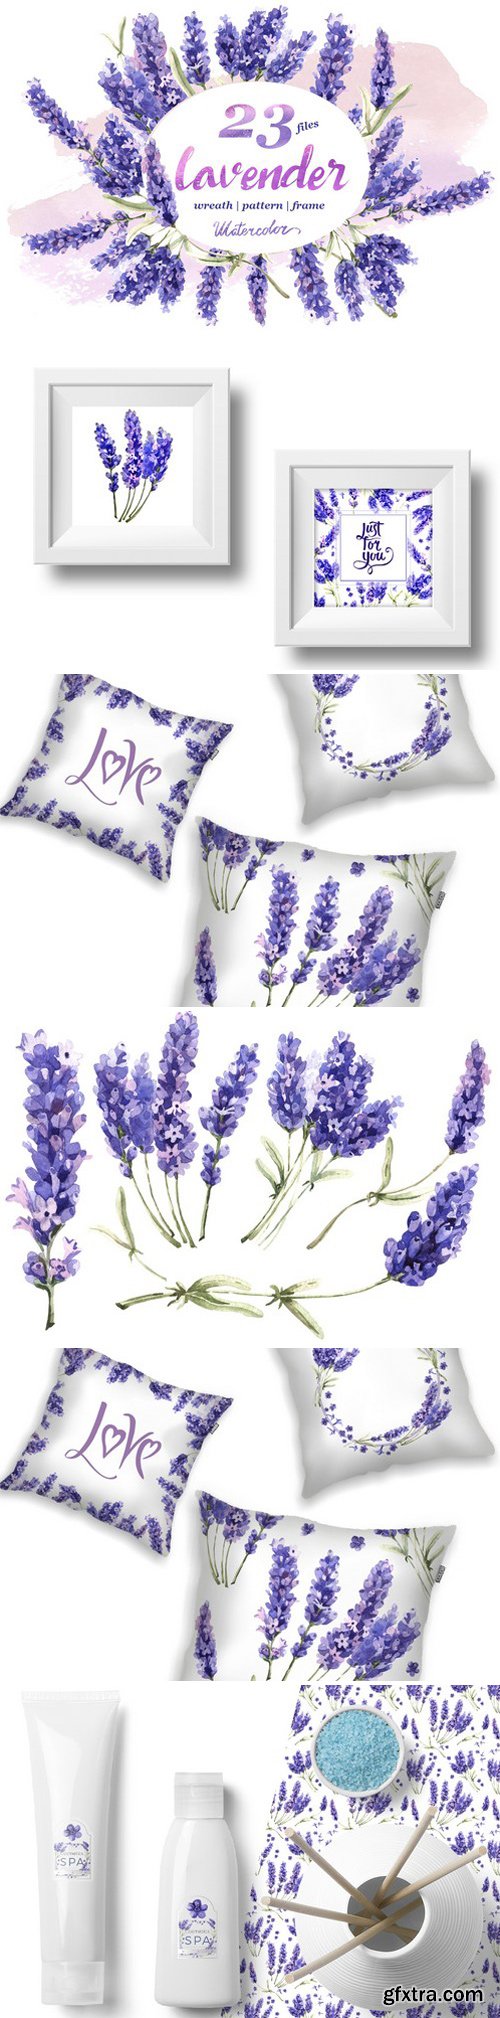 Lavender PNG flowers in watercolor